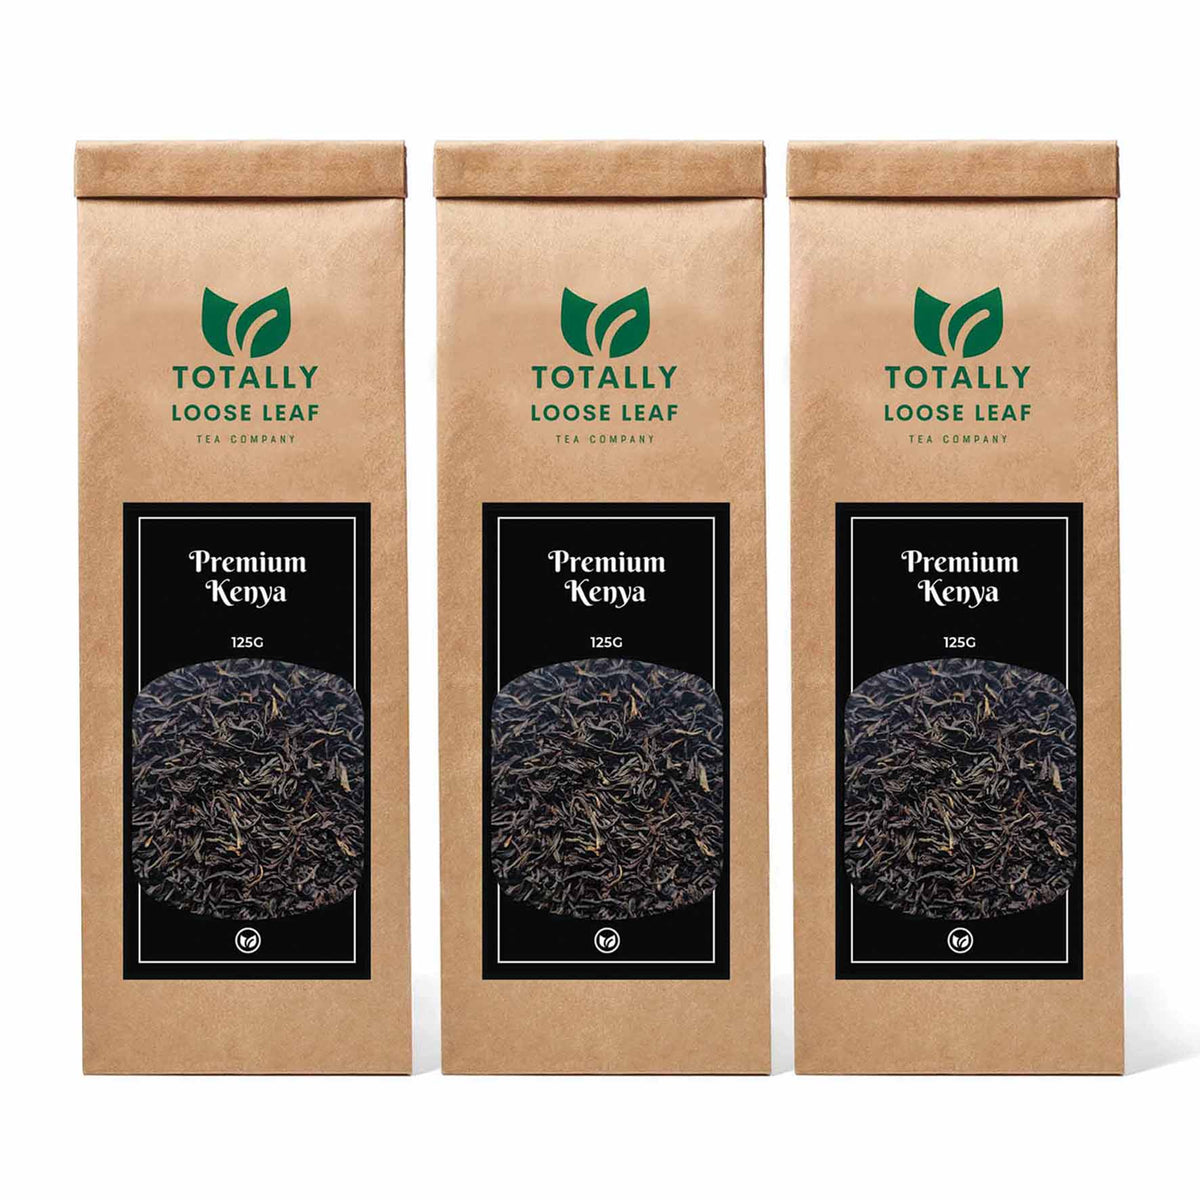 Premium Kenya Black Estate Loose Leaf Tea - three pouches